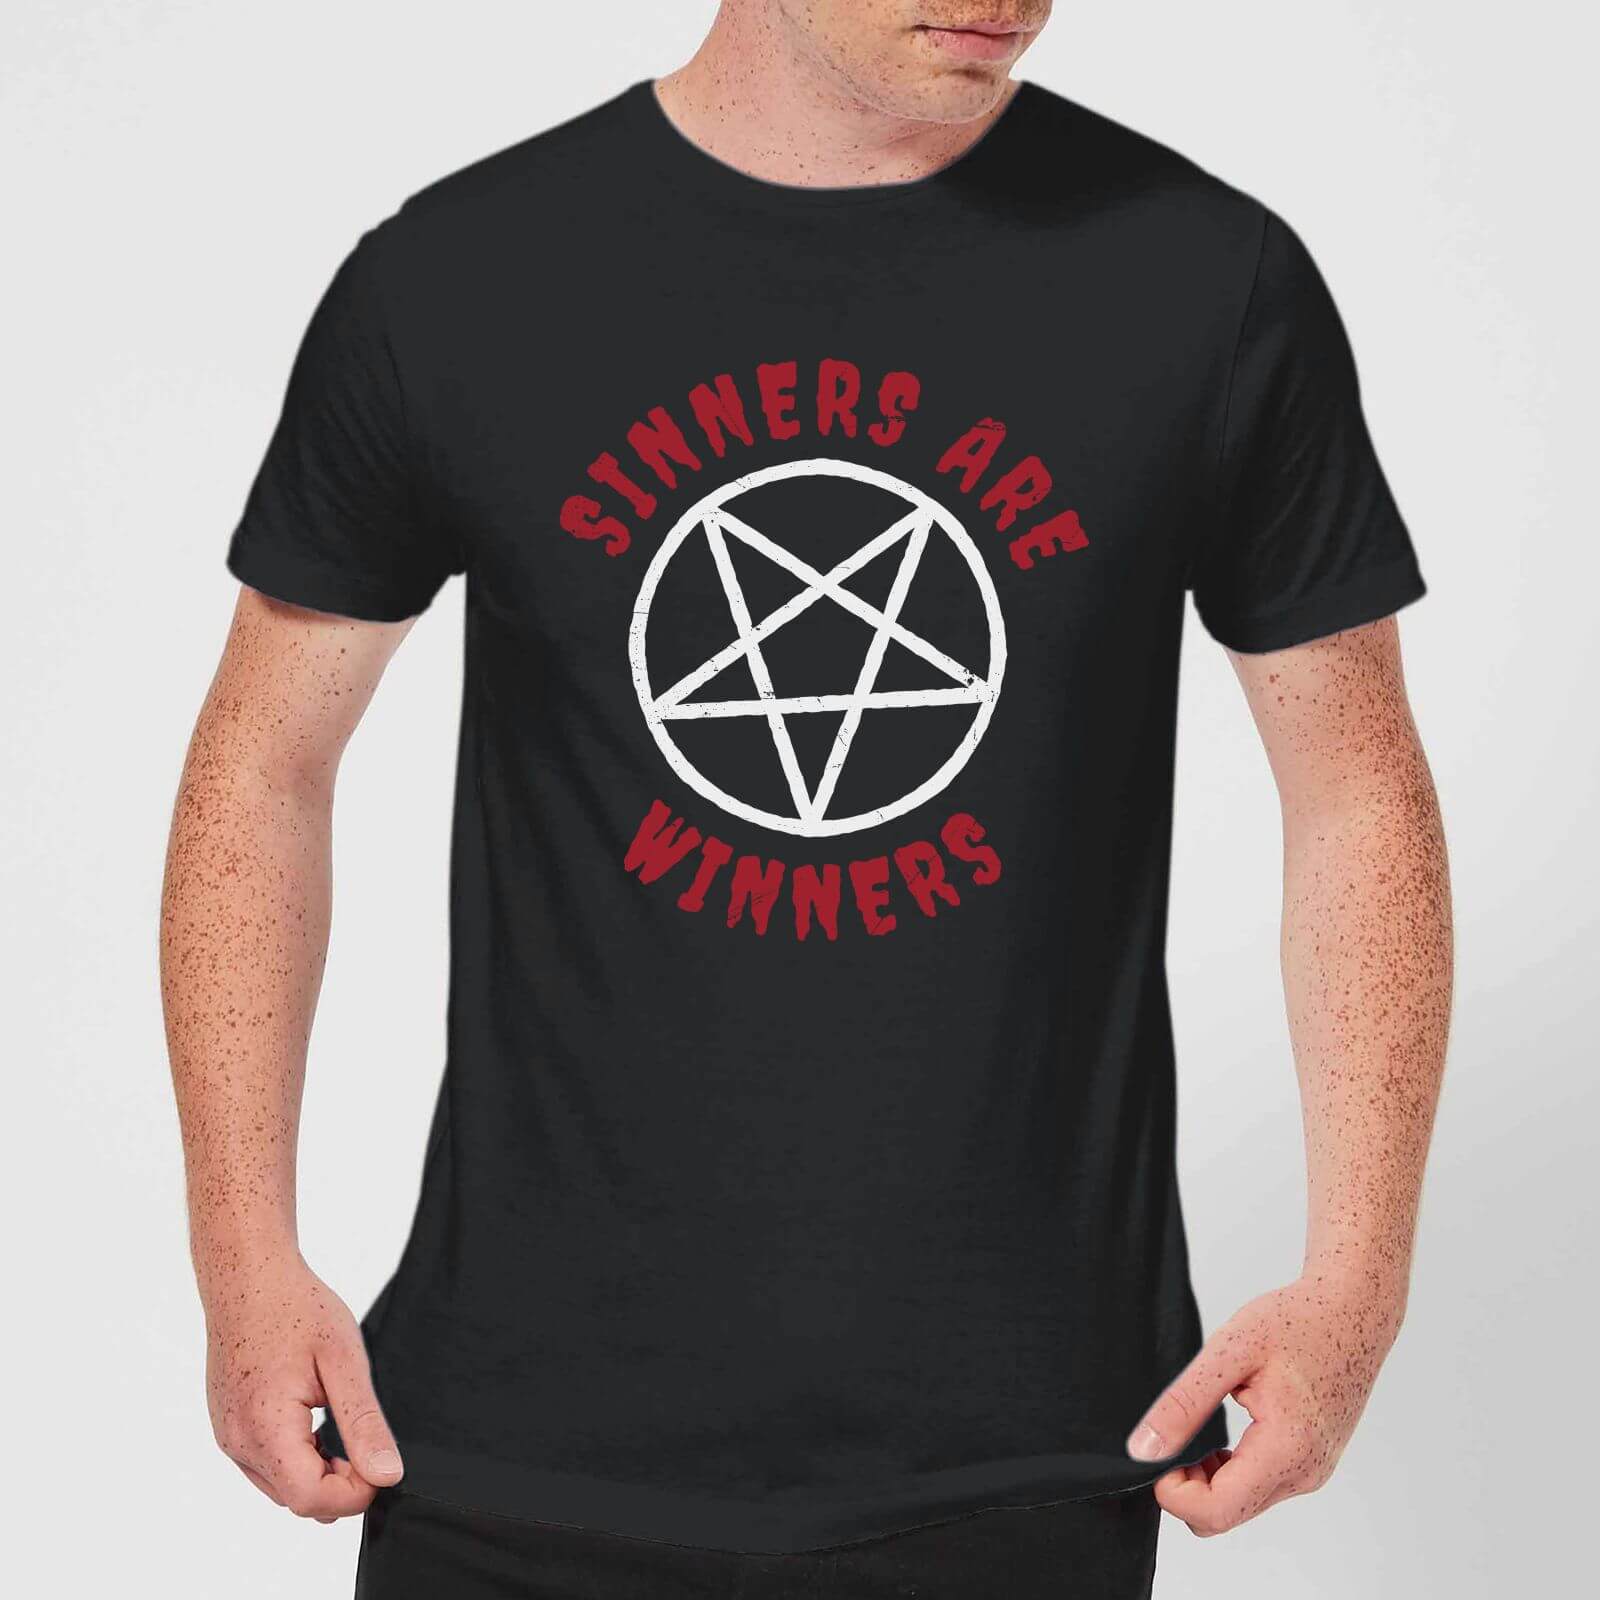 Sinners Are Winners Men's T-Shirt - Black - M - Black